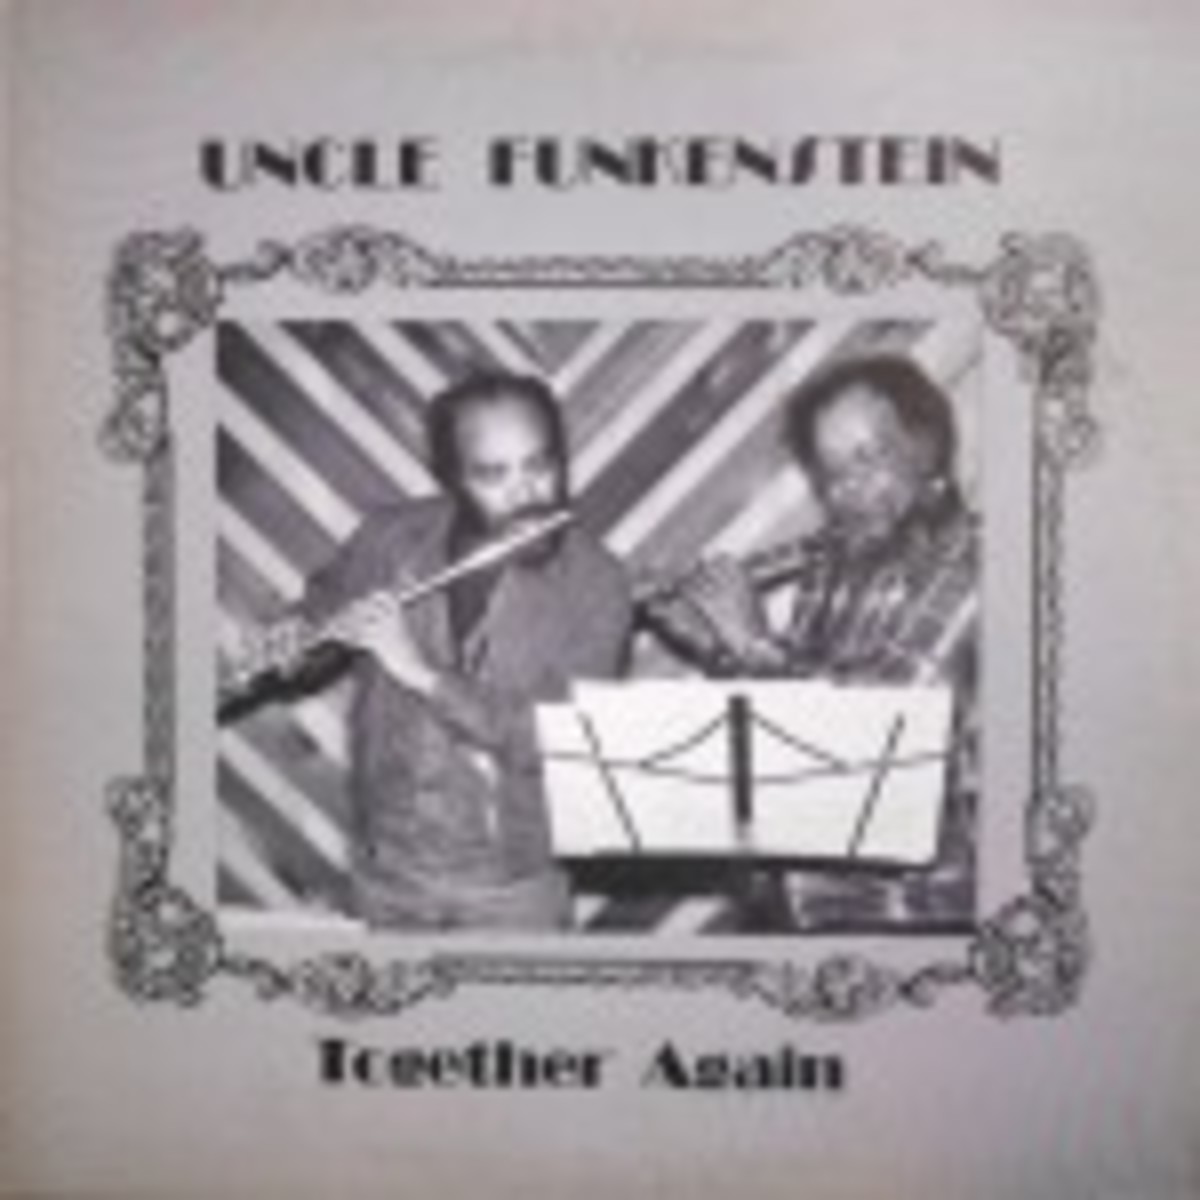 Uncle Funkenstein Together Again